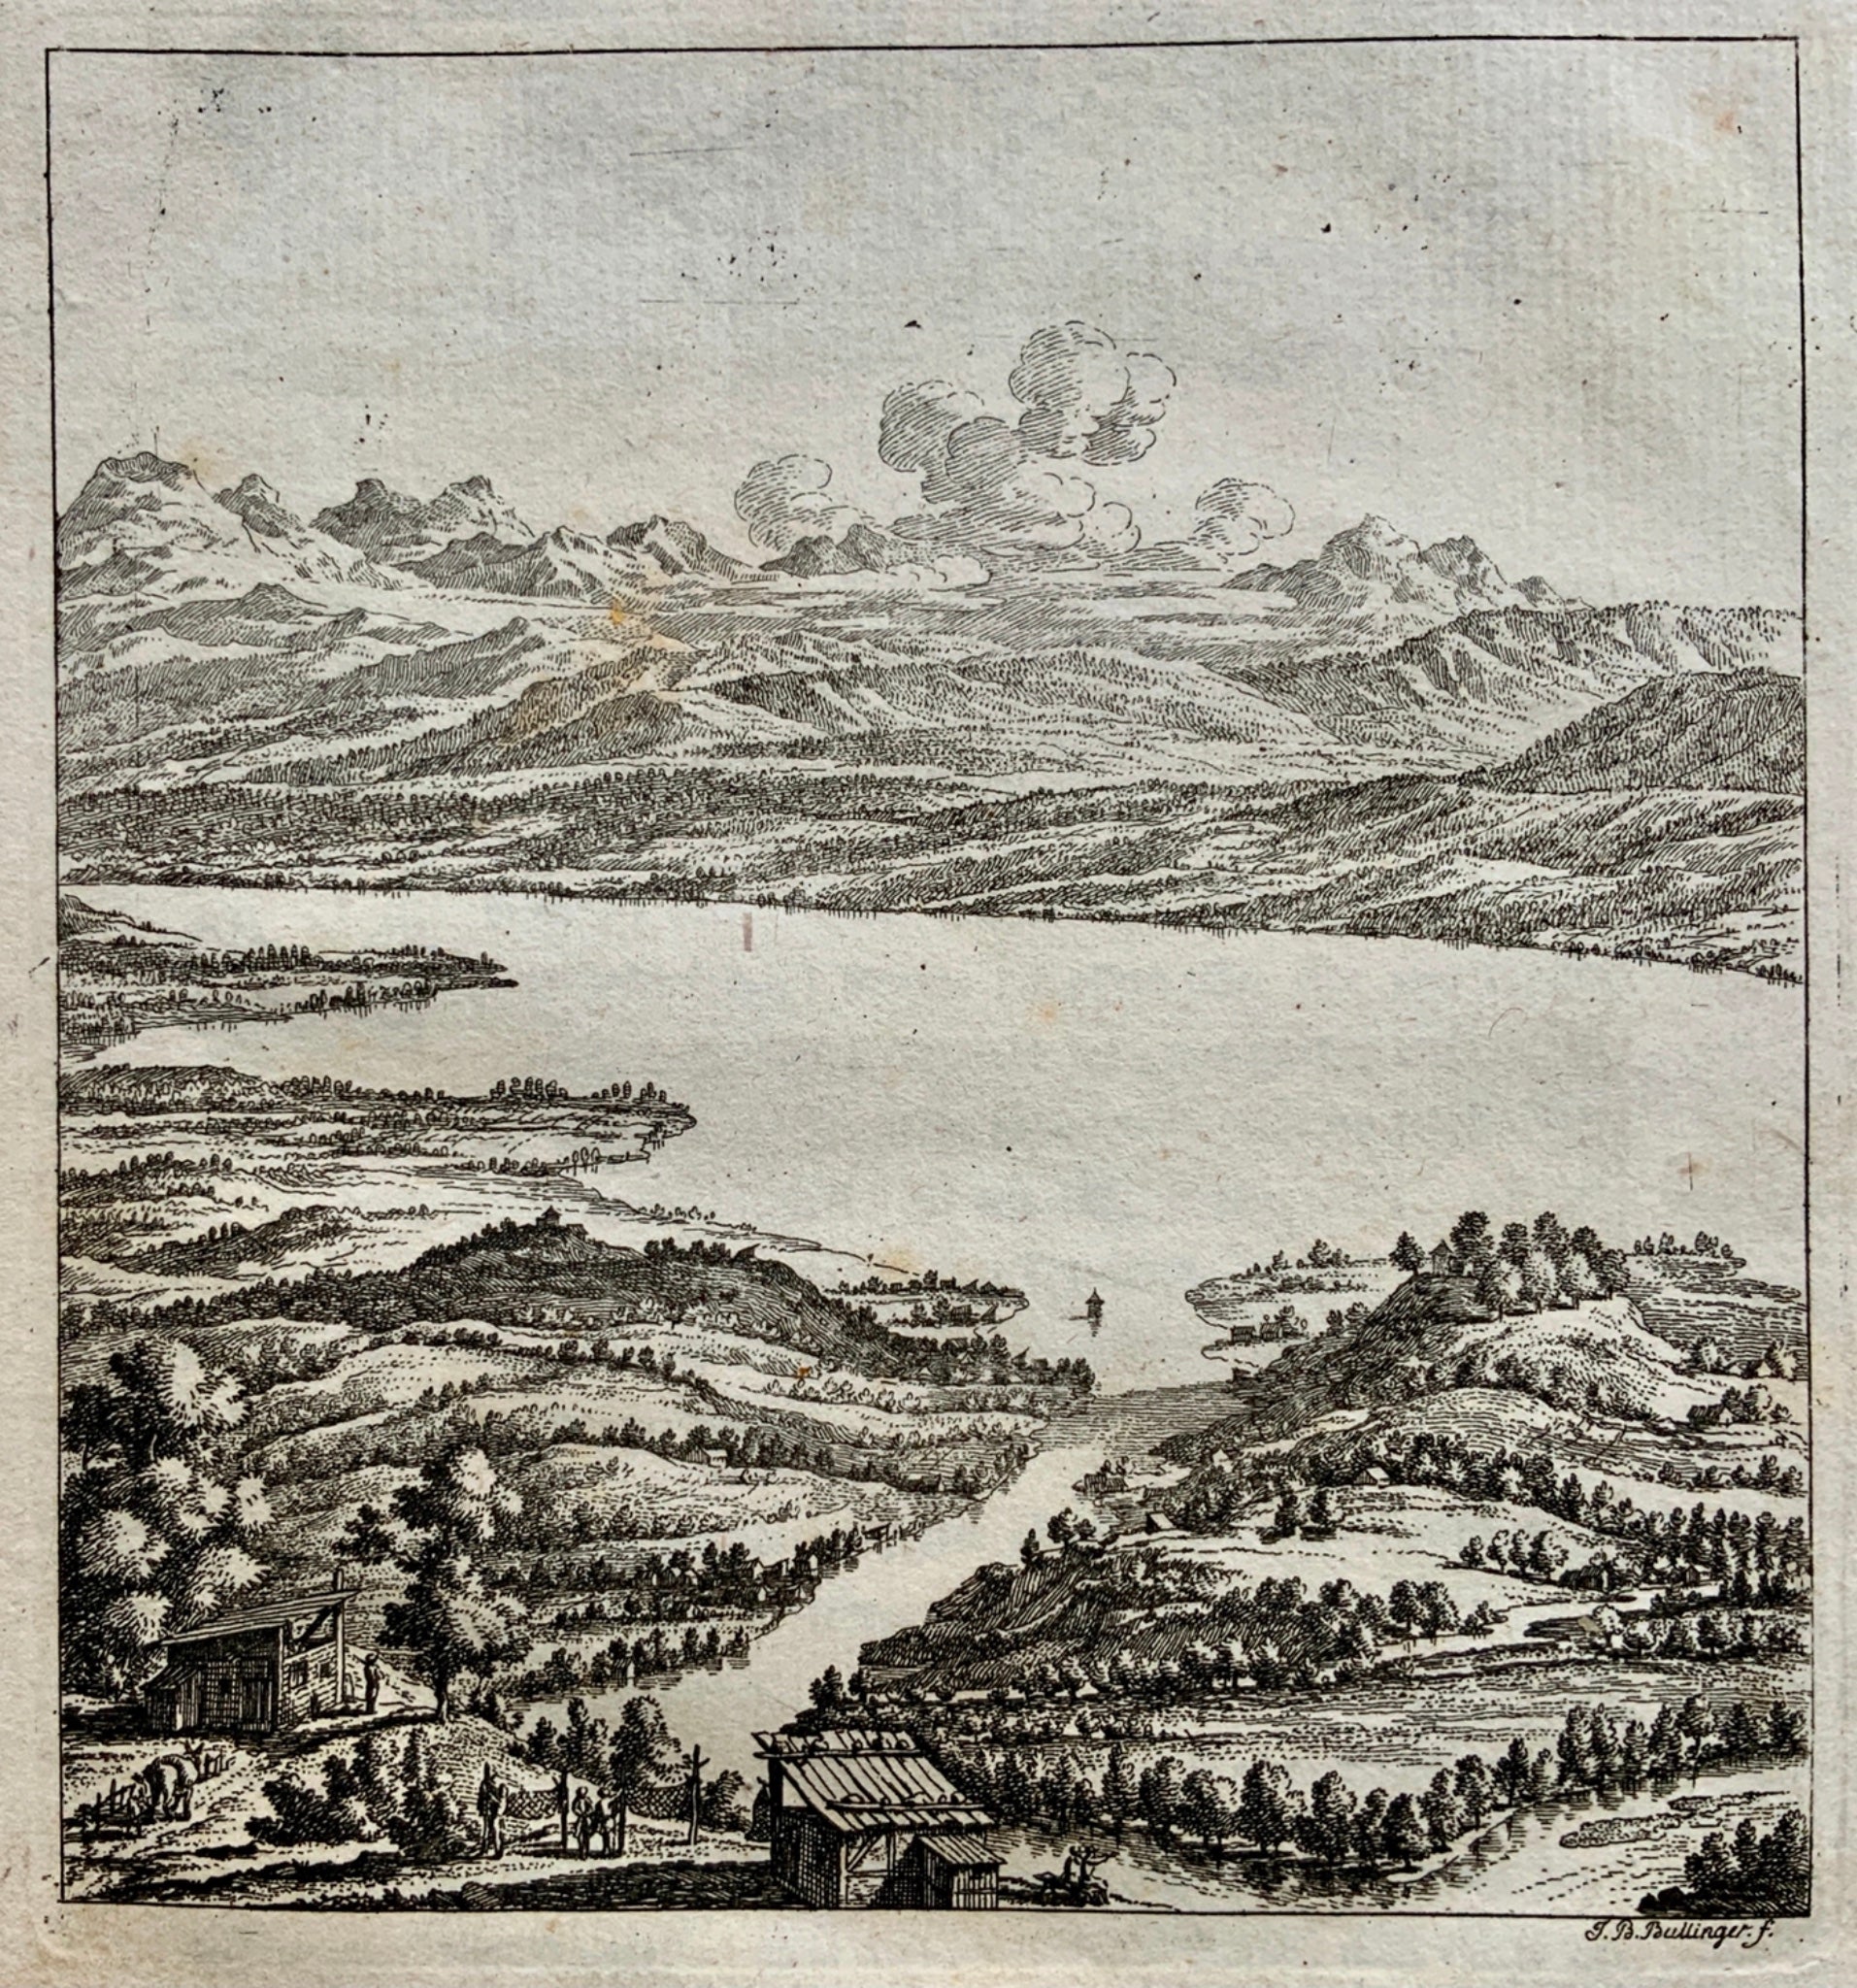 1773 [J.B. Bullinger] Zurich and its Roman Foundation - Switzerland